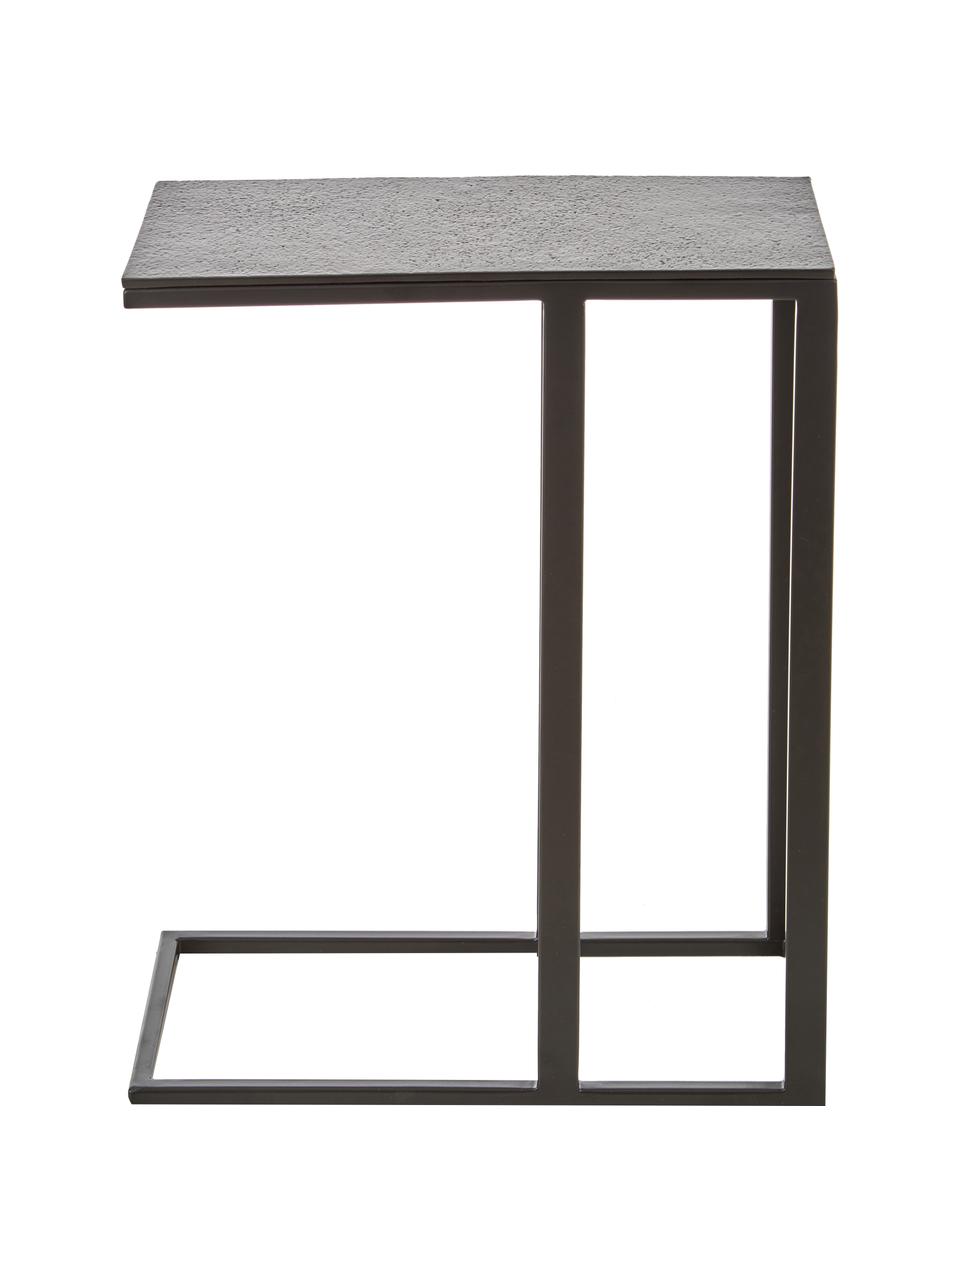 Beistelltisch Edge im Industrial Design, Tischplatte: Metall, beschichtet, Gestell: Metall, pulverbeschichtet, Tischplatte: Schwarz Gestell: Schwarz, matt, B 45 x H 62 cm